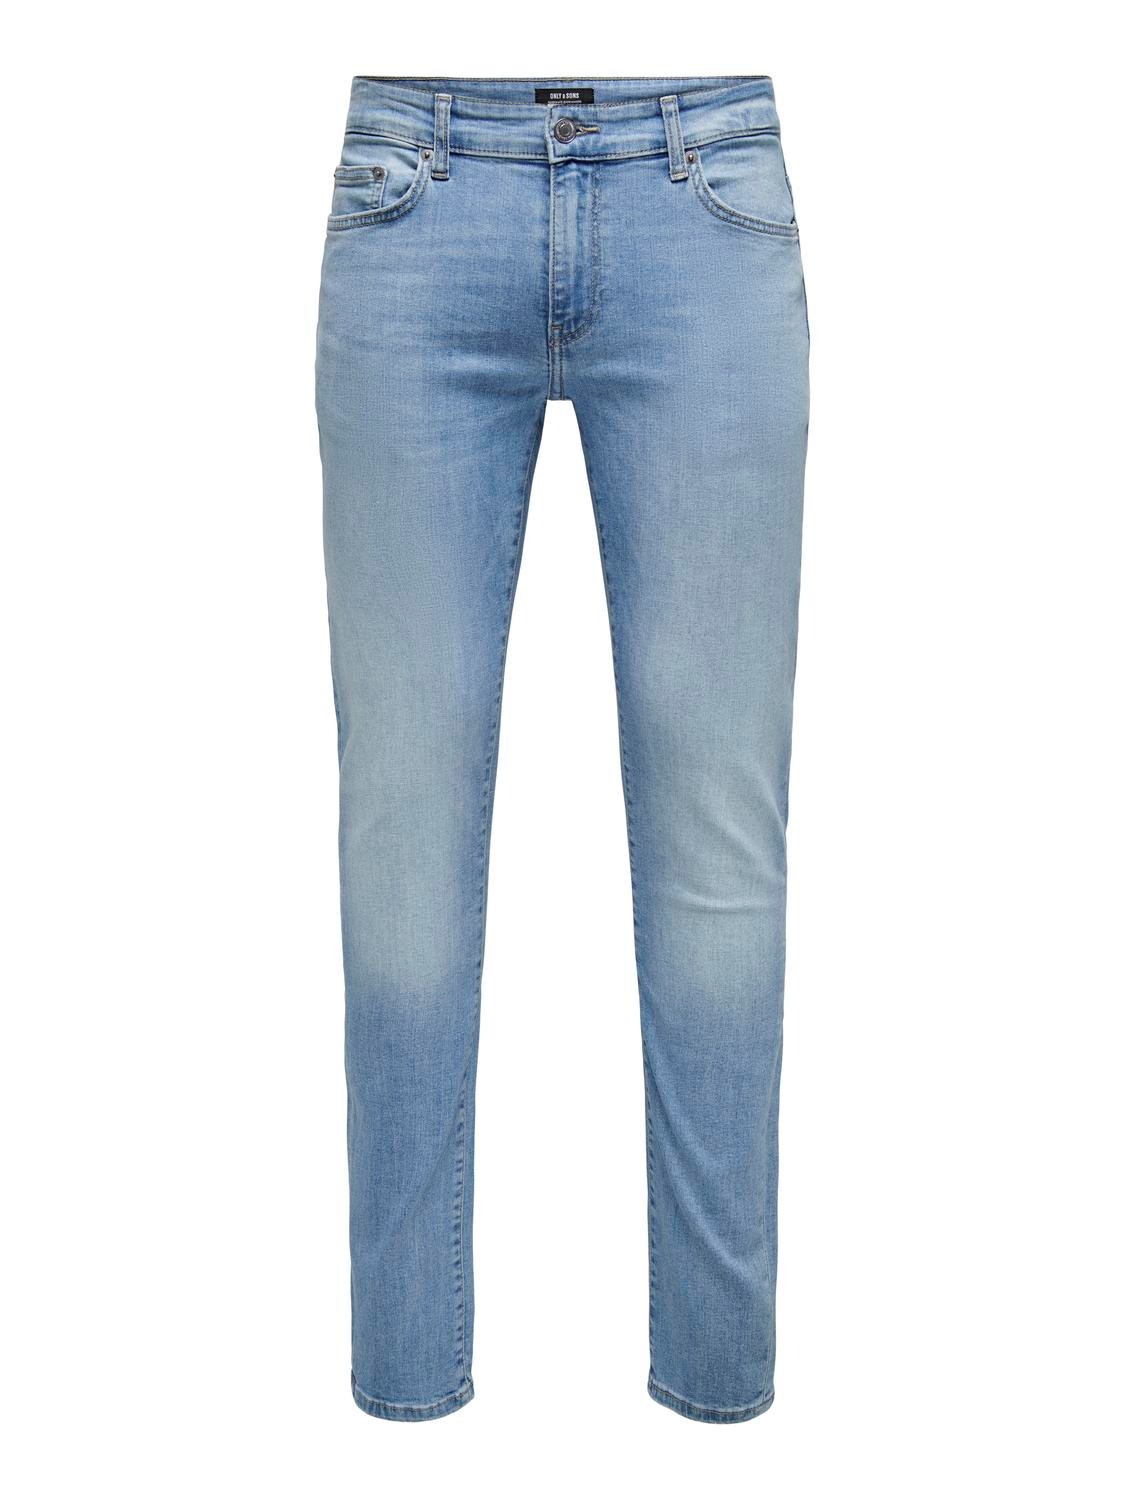 ONLY & SONS Slim Fit Low rise Jeans -Light Blue Denim - 22028263